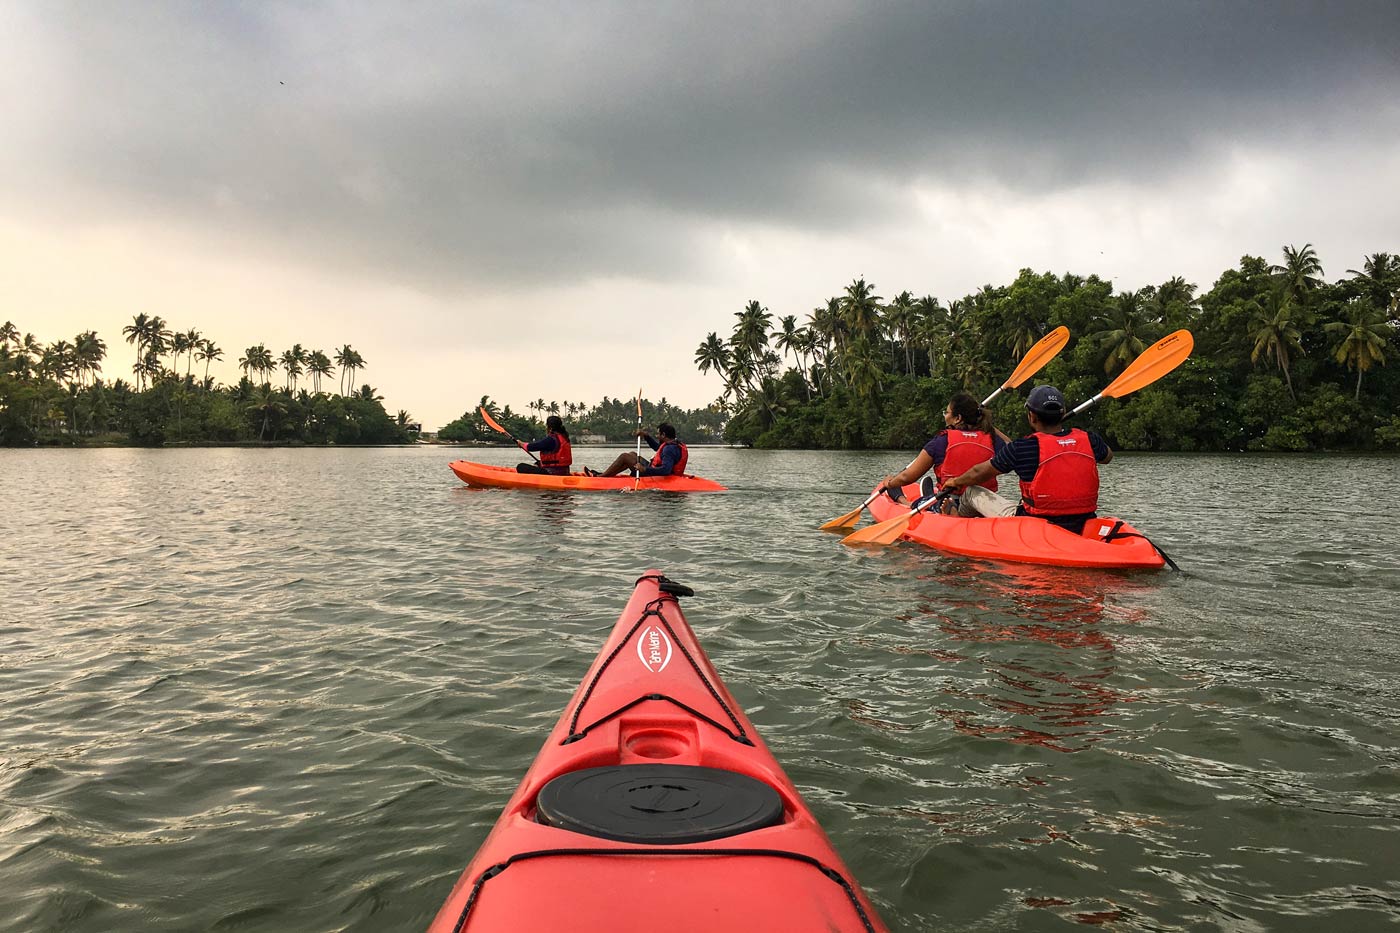 Syzygy ecosports kayaking in kerala kollam things to do in varkala paravur lake backwaters